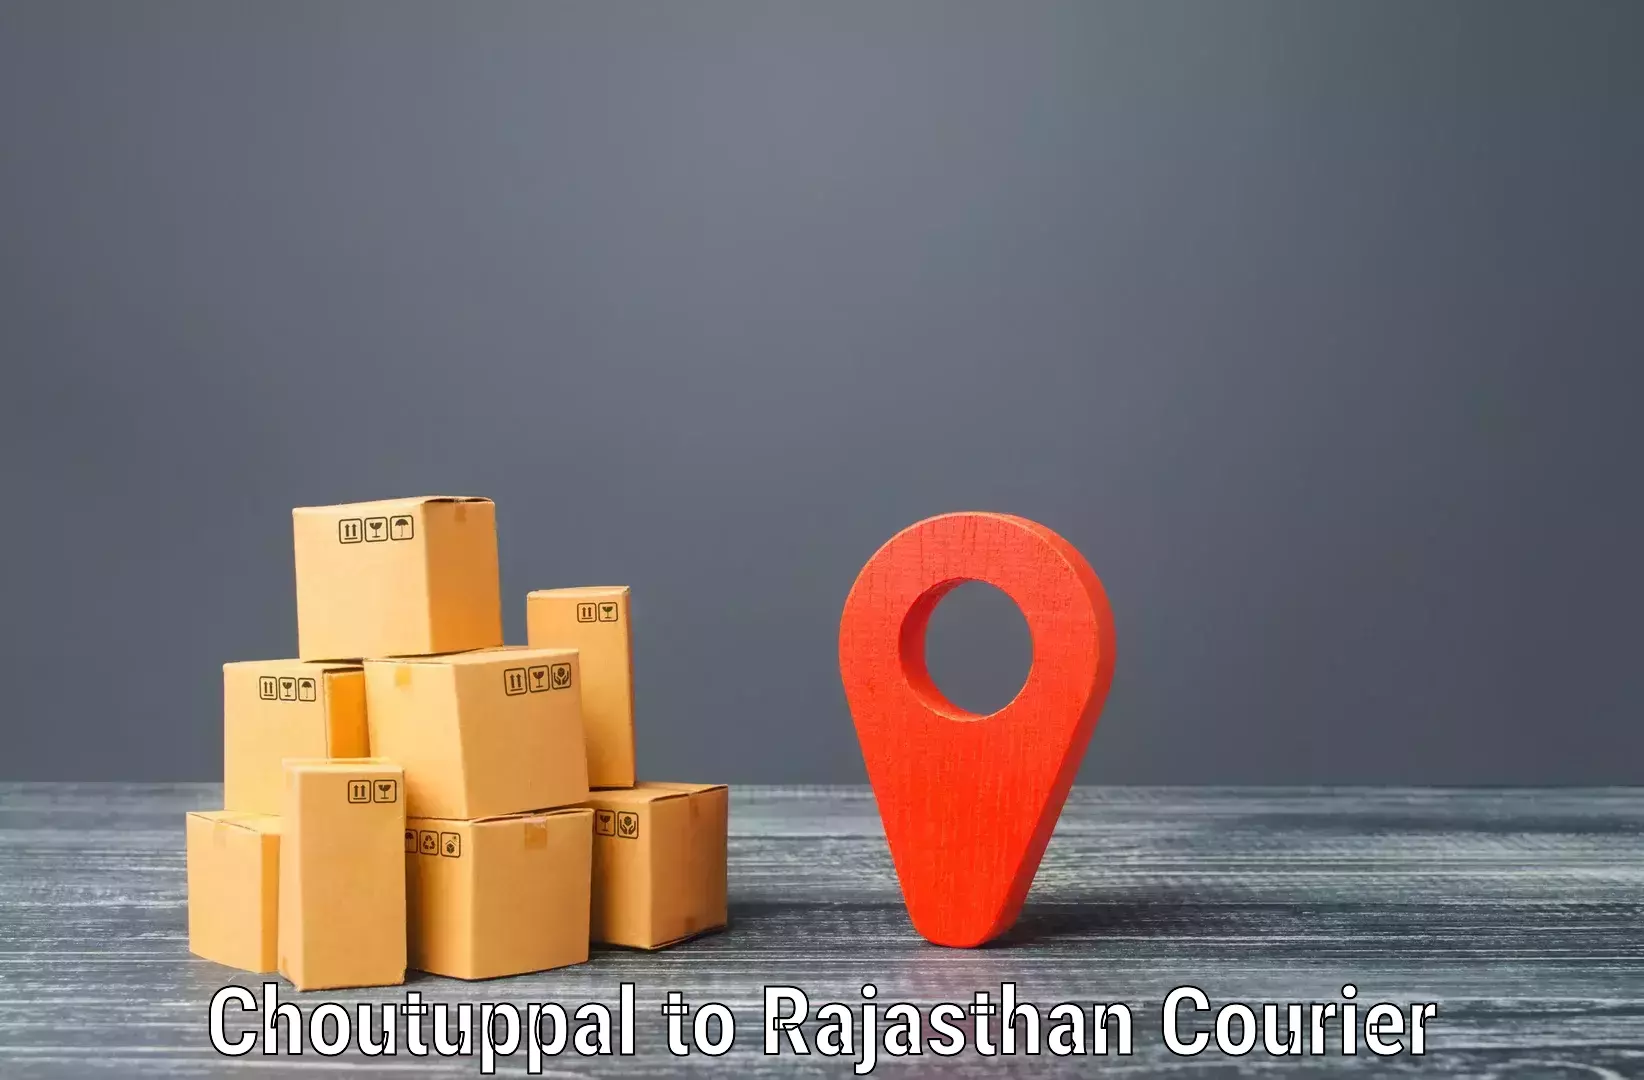 Express delivery network Choutuppal to Bandikui